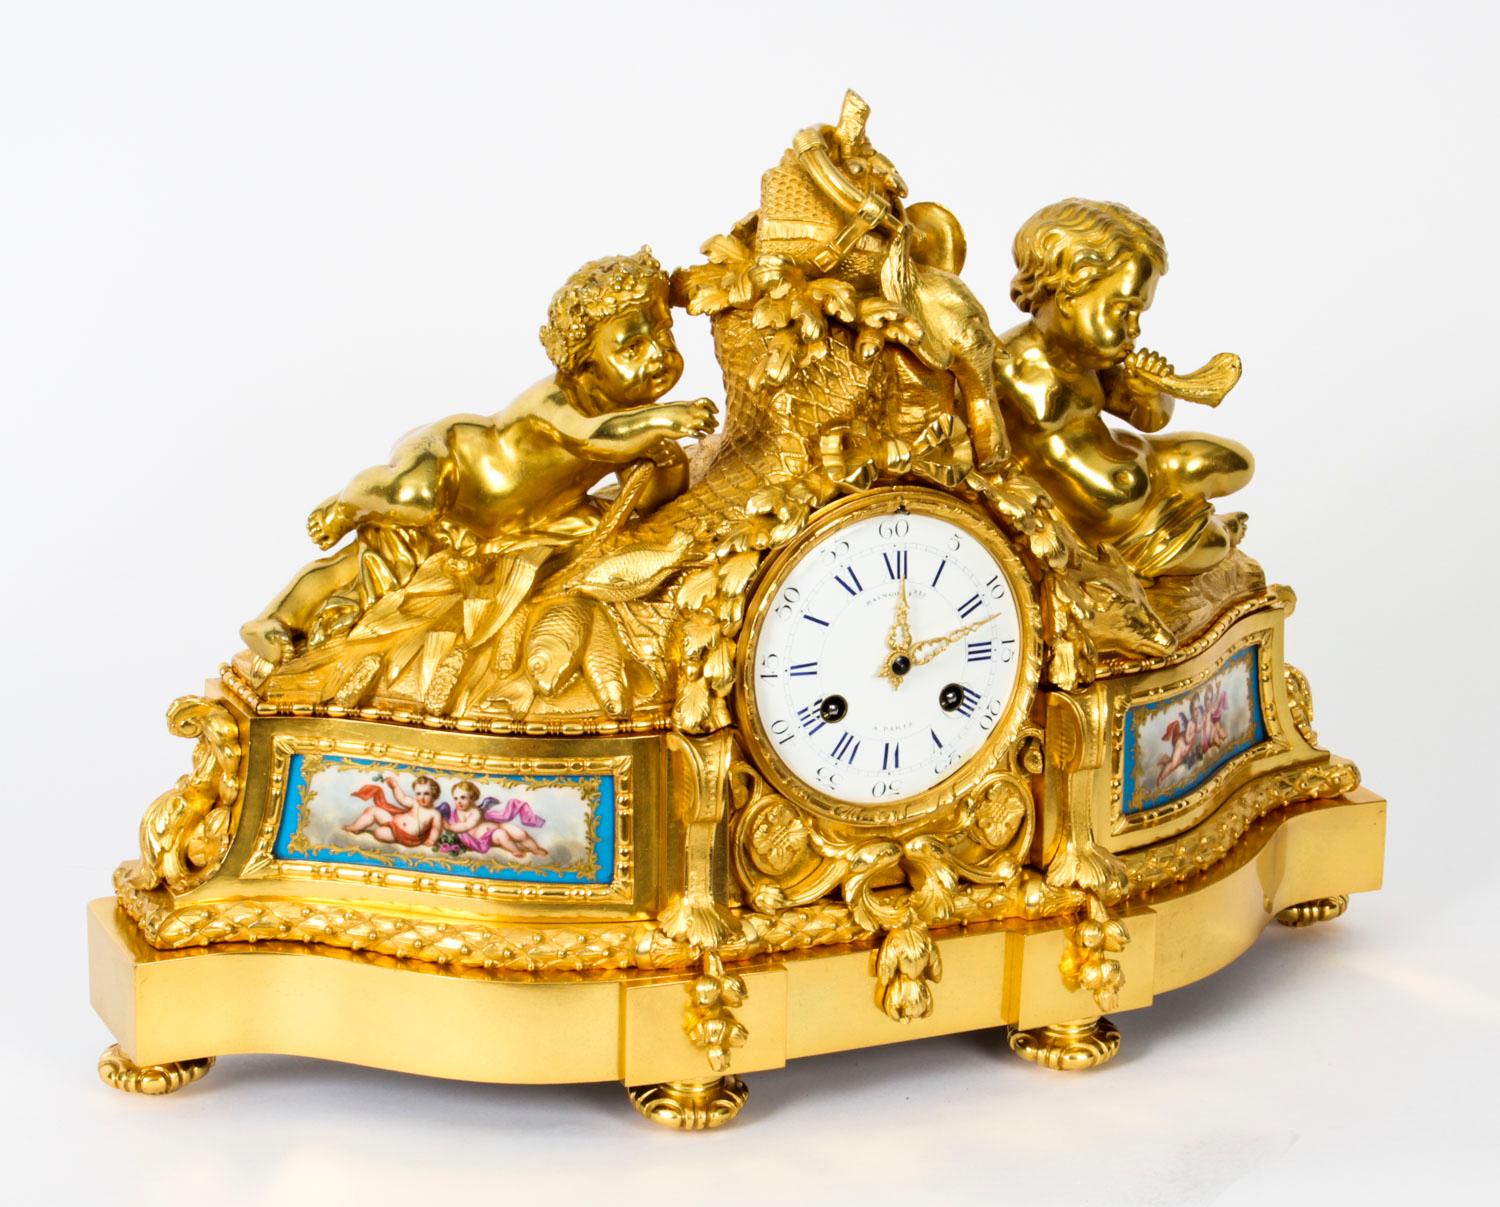 Antique French Sevres Porcelain Ormolu Clock by Raingo Freres, 19th Century For Sale 4